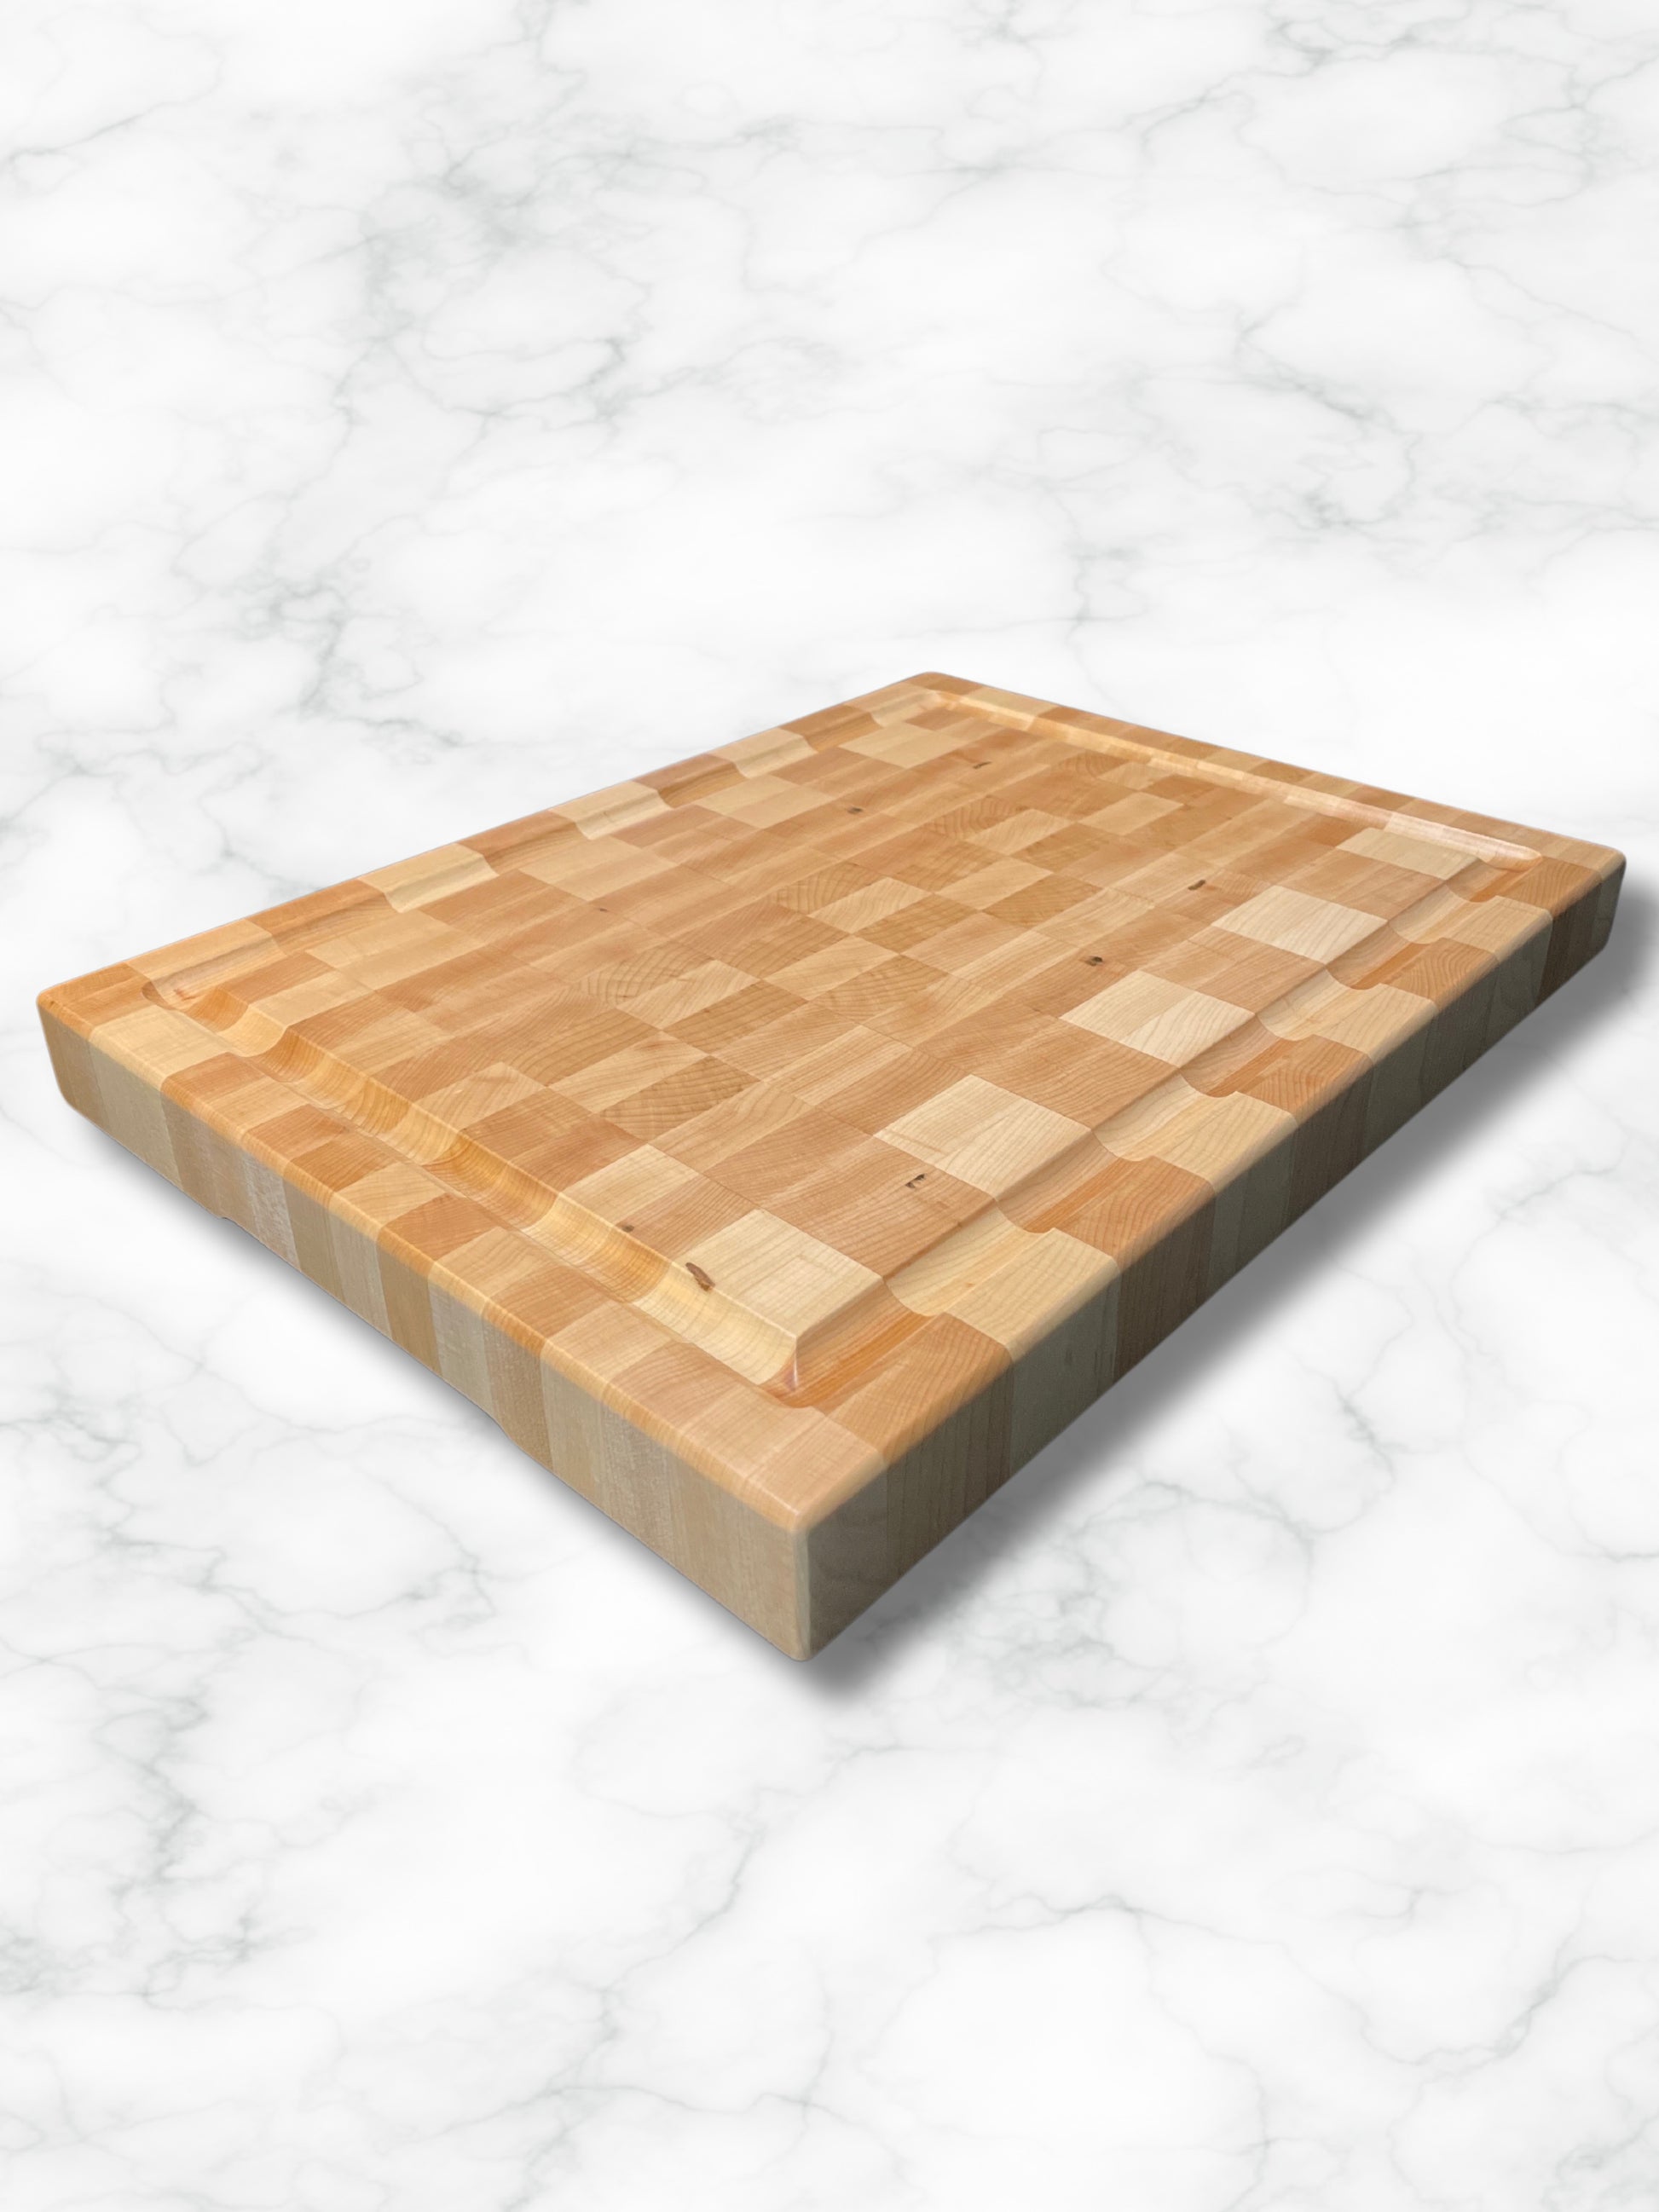 custom handmade end grain maple wood cutting board, side view